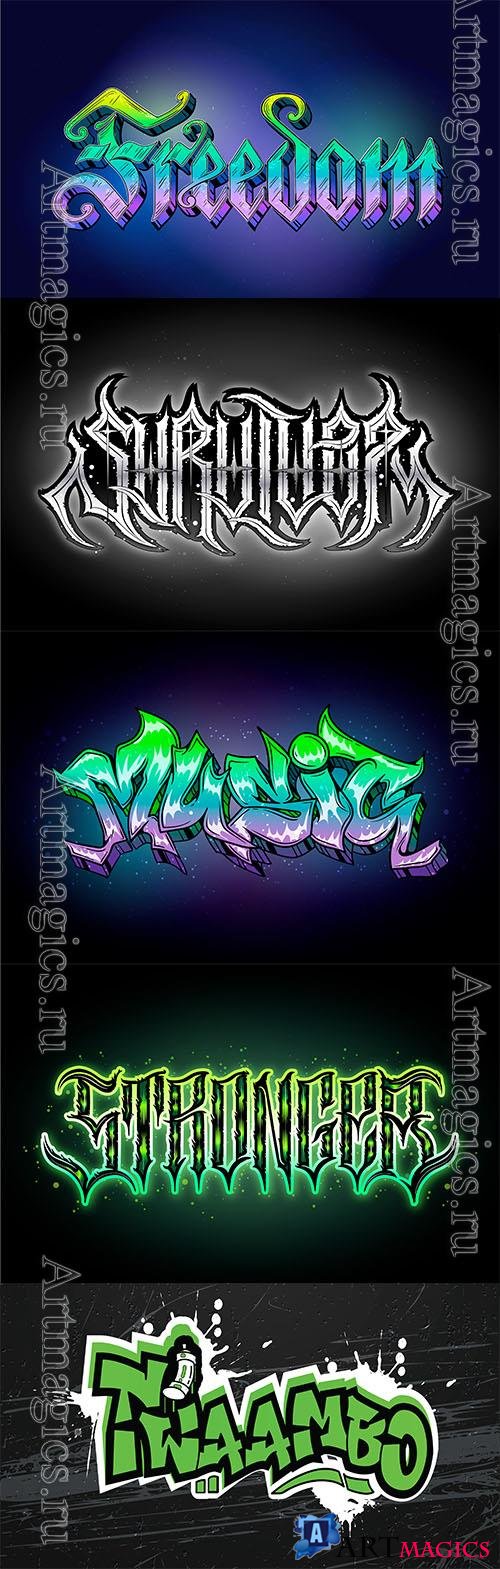 Hand drawn graffiti text effect vector design